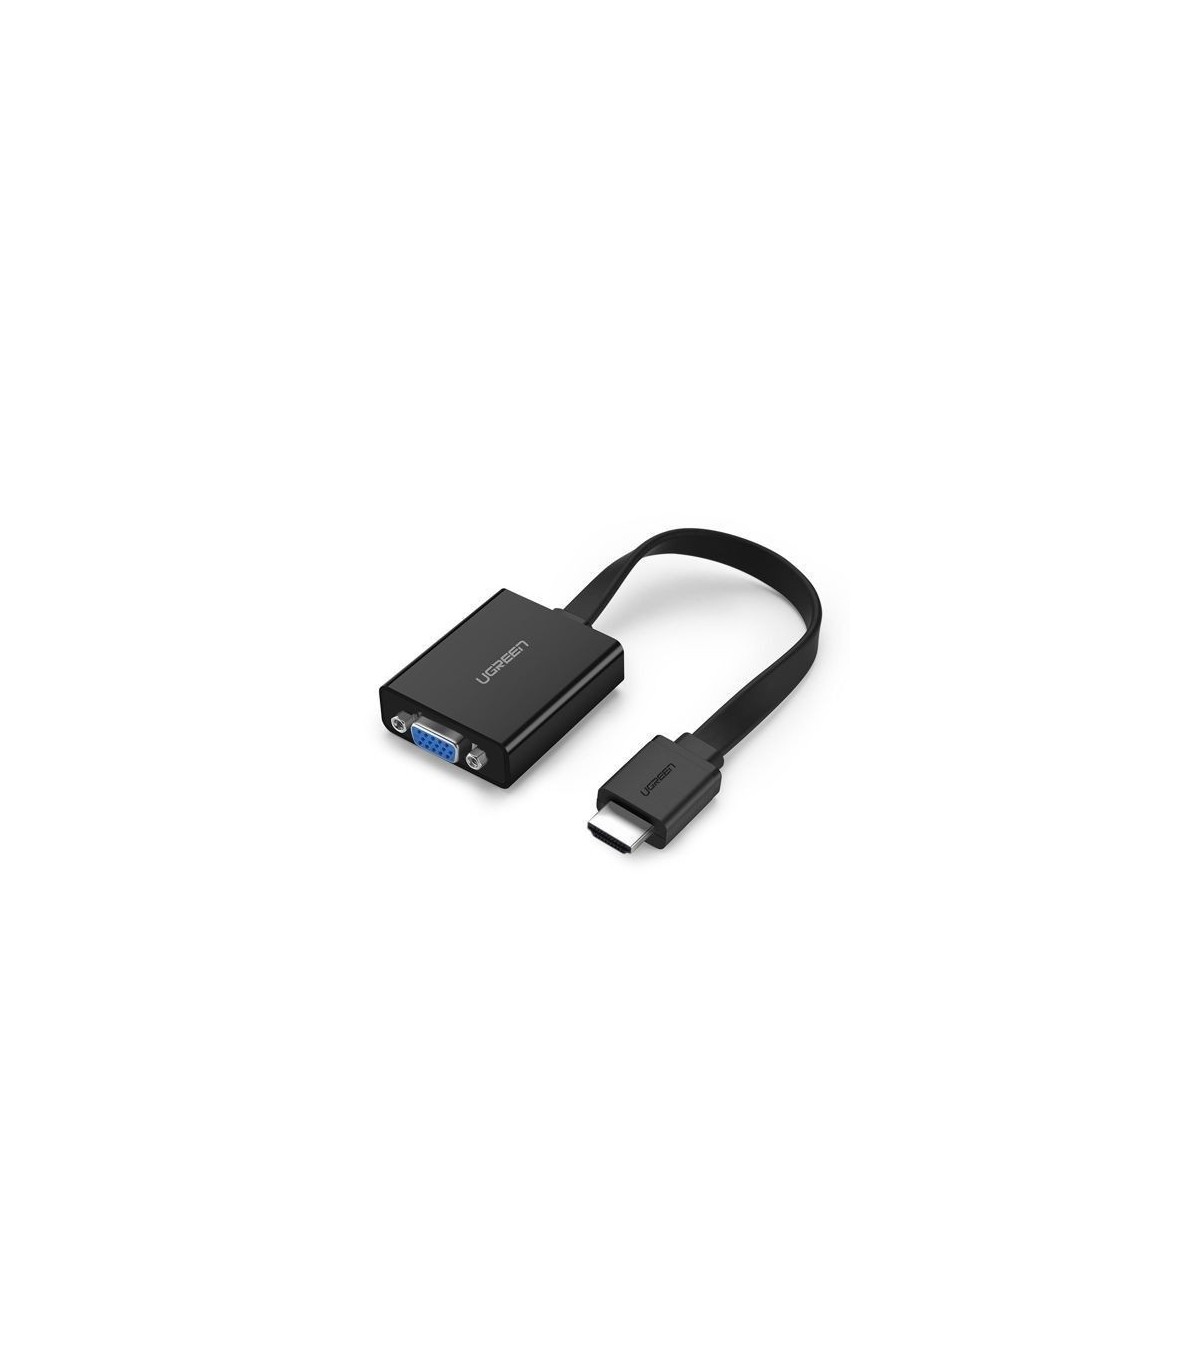 AB-HDMI-USB-021-US ADAPTADOR USB A HDMI, USB 3.0/2.0 A HDMI 1080P -  Convertidores de Video - Camaras de Seguridad Y Control de Acceso